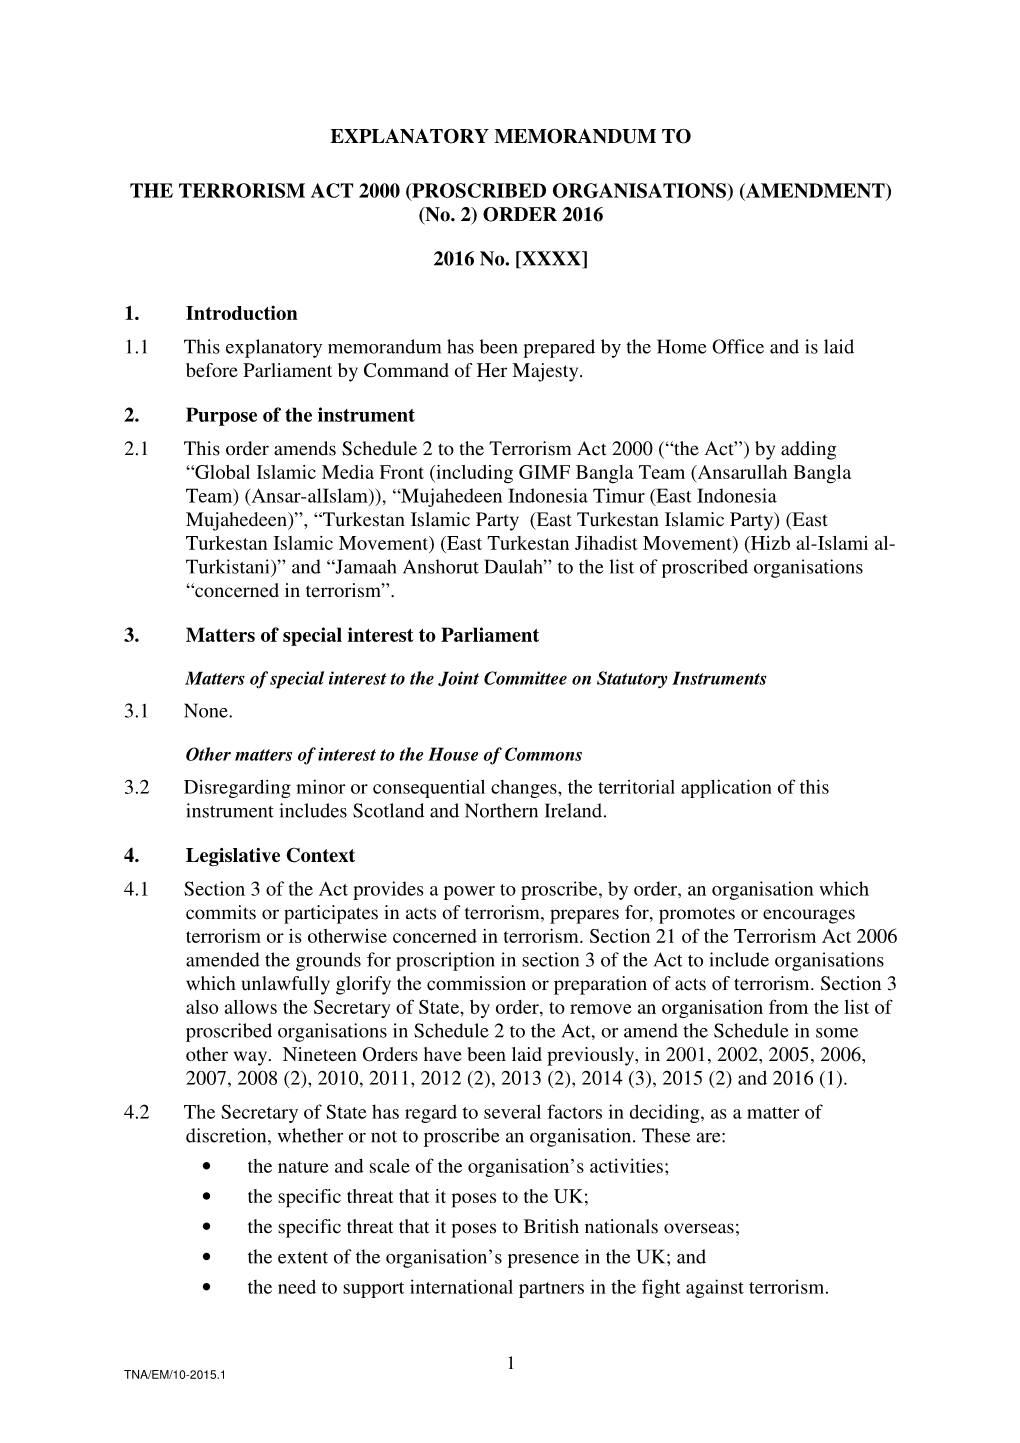 THE TERRORISM ACT 2000 (PROSCRIBED ORGANISATIONS) (AMENDMENT) (No